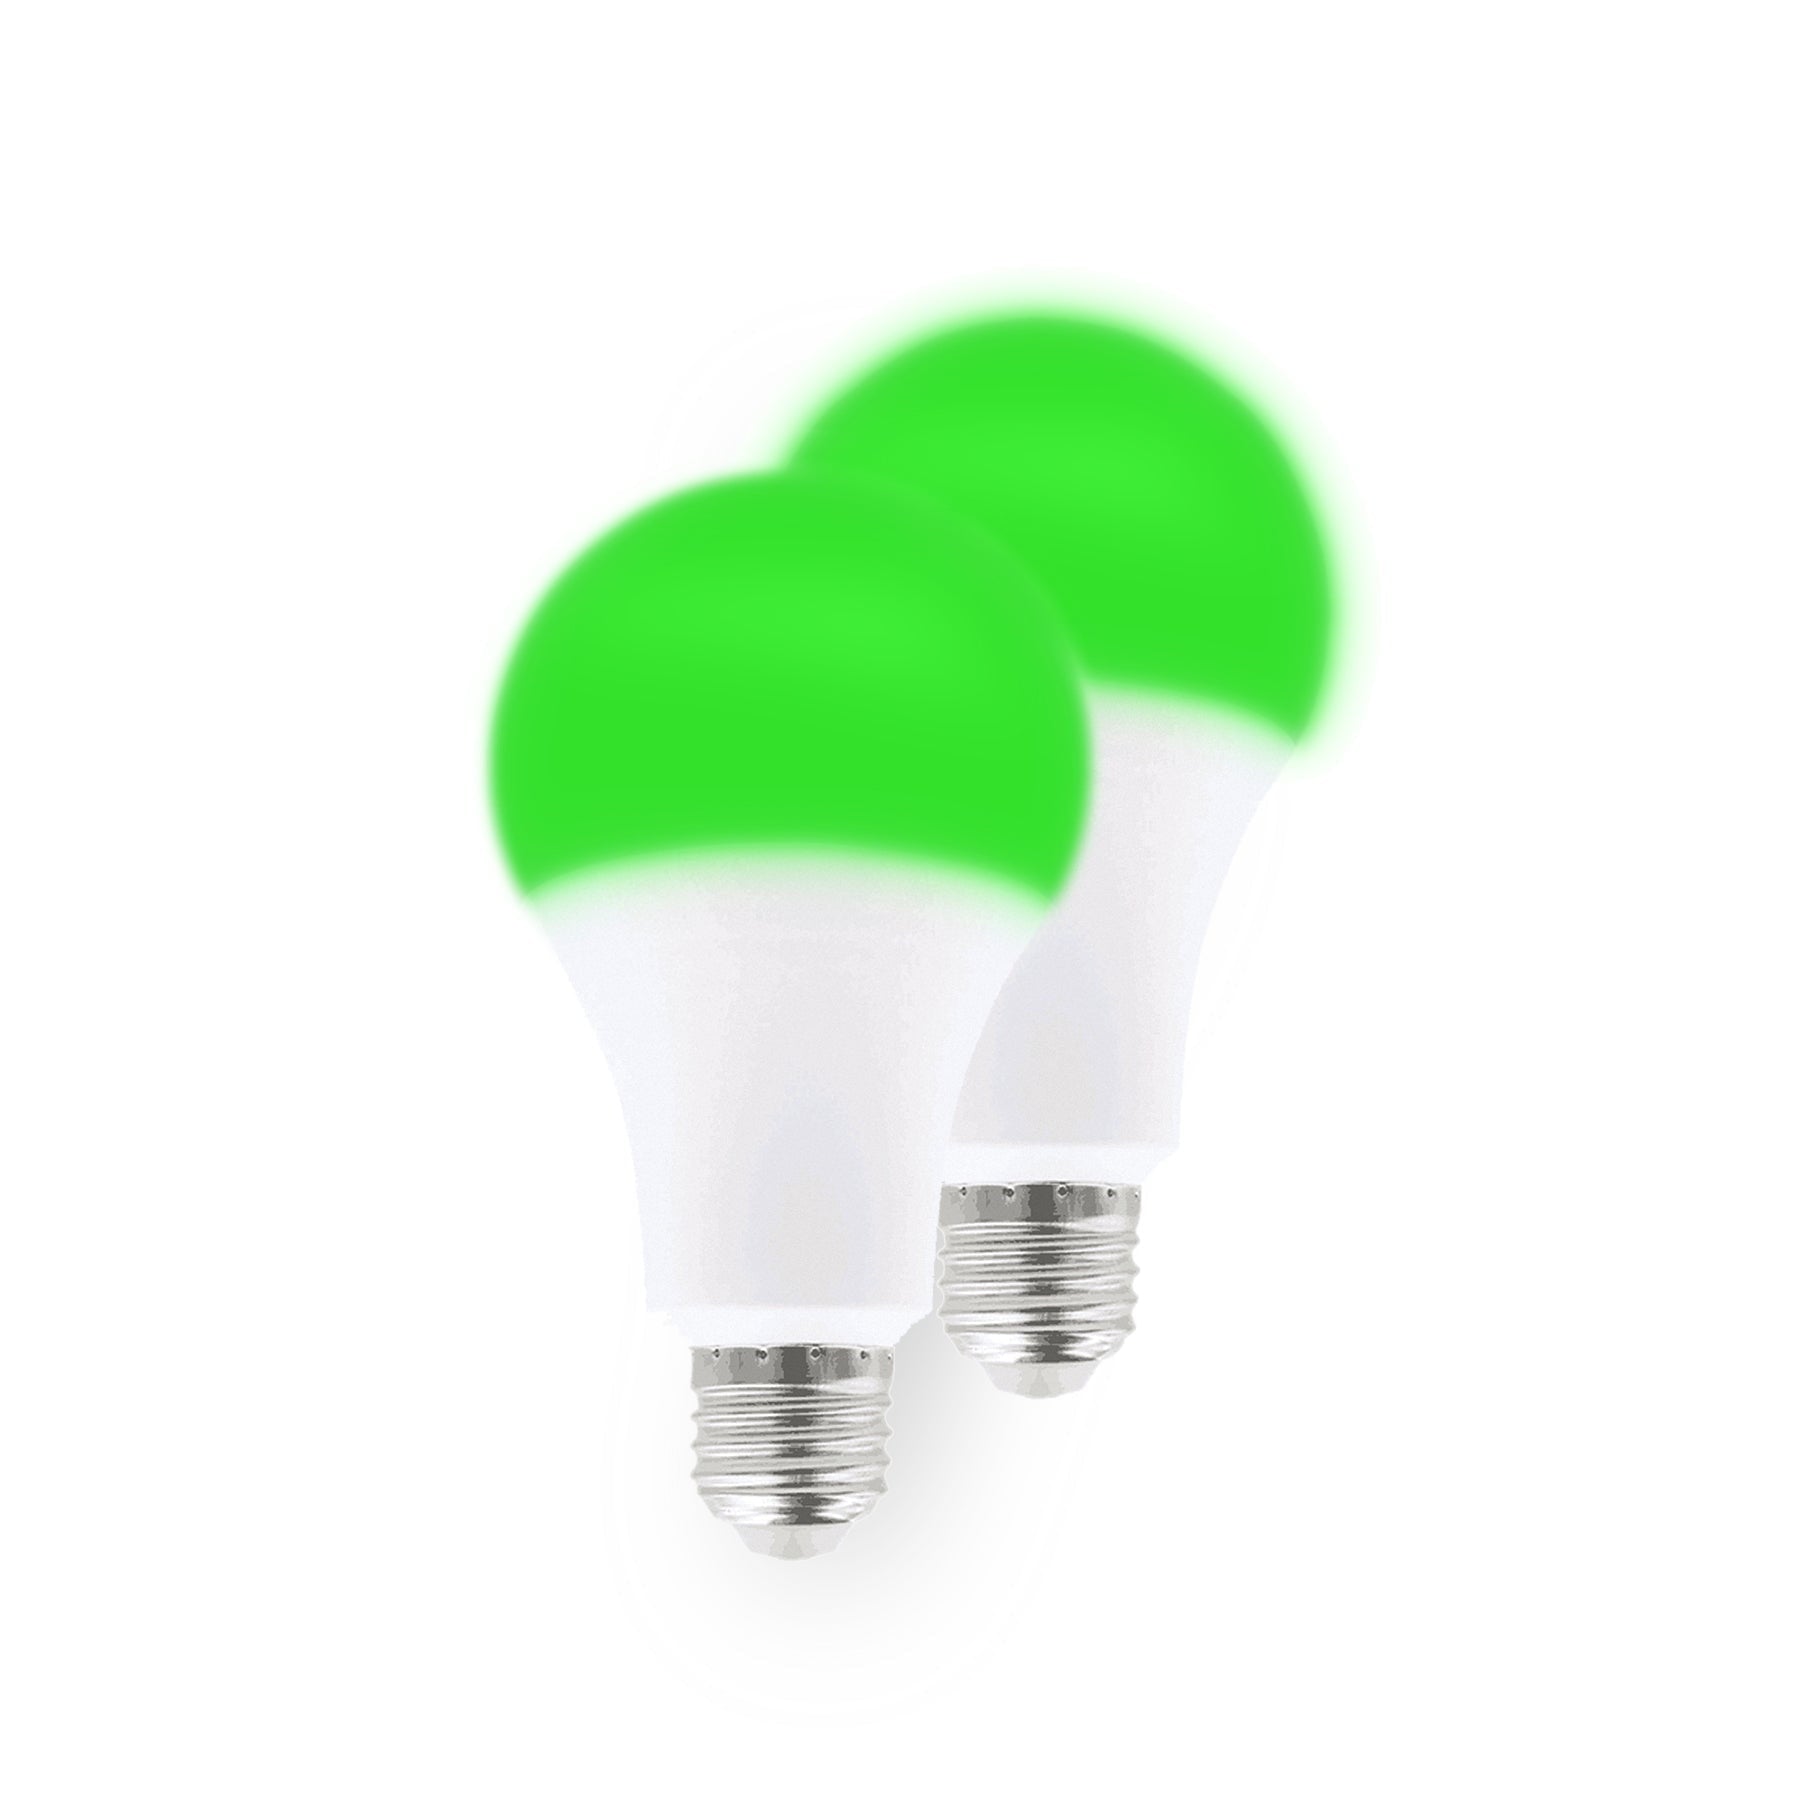 Hooga Green Migraine Bulb